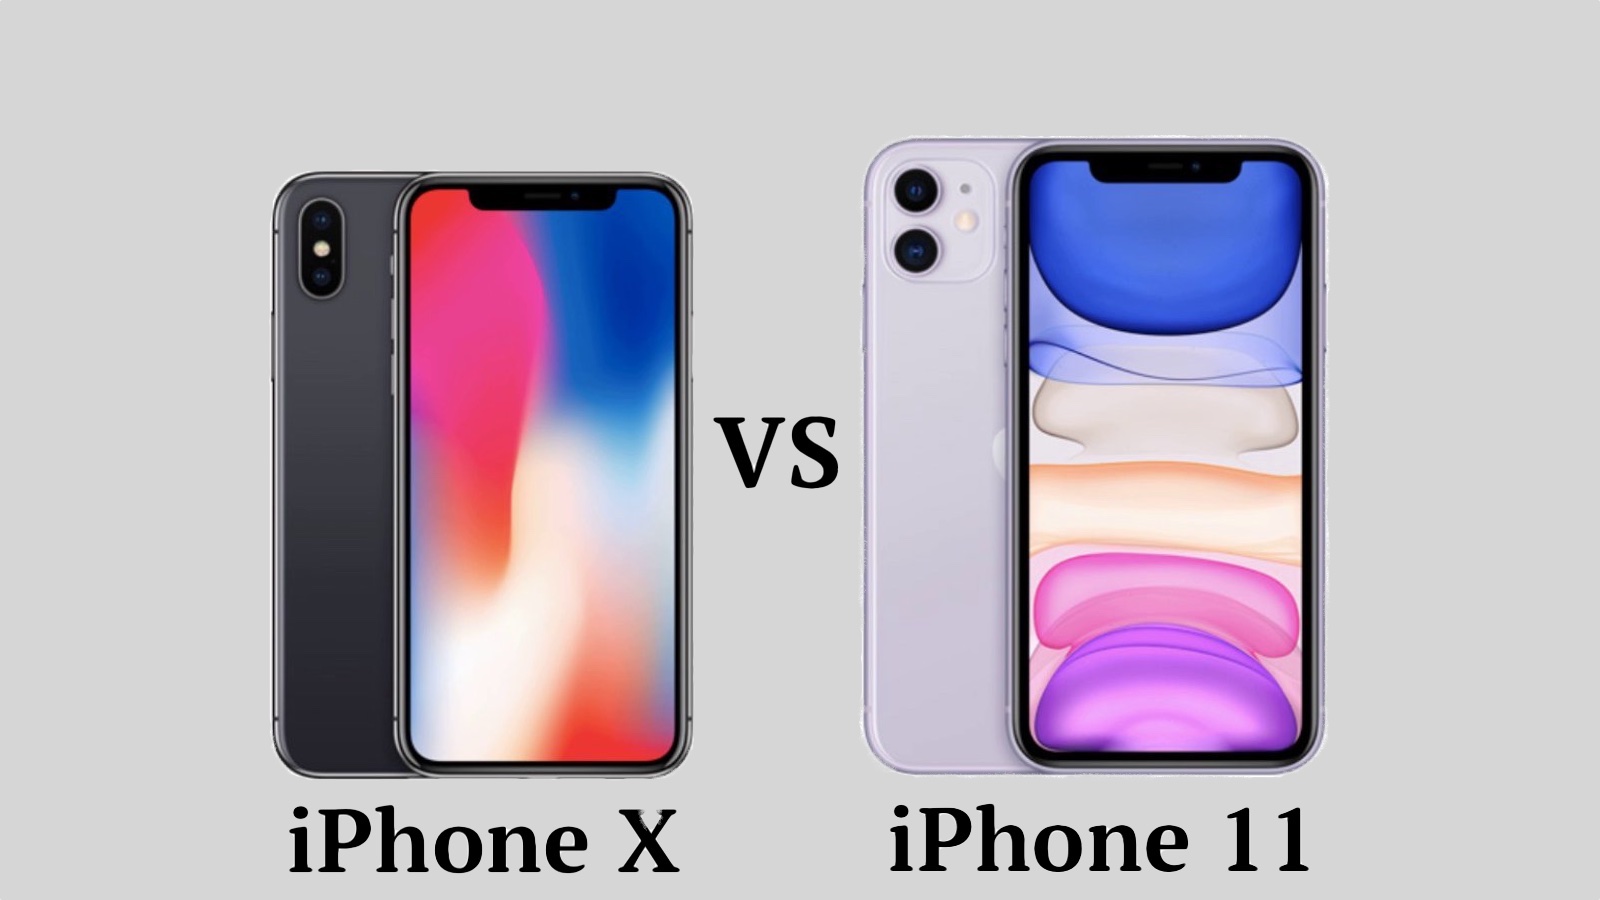 11 про и 10 сравнение. Iphone 11 и iphone x. Iphone 12 Pro и iphone x. Iphone x vs 11. Iphone 10 iphone 11.